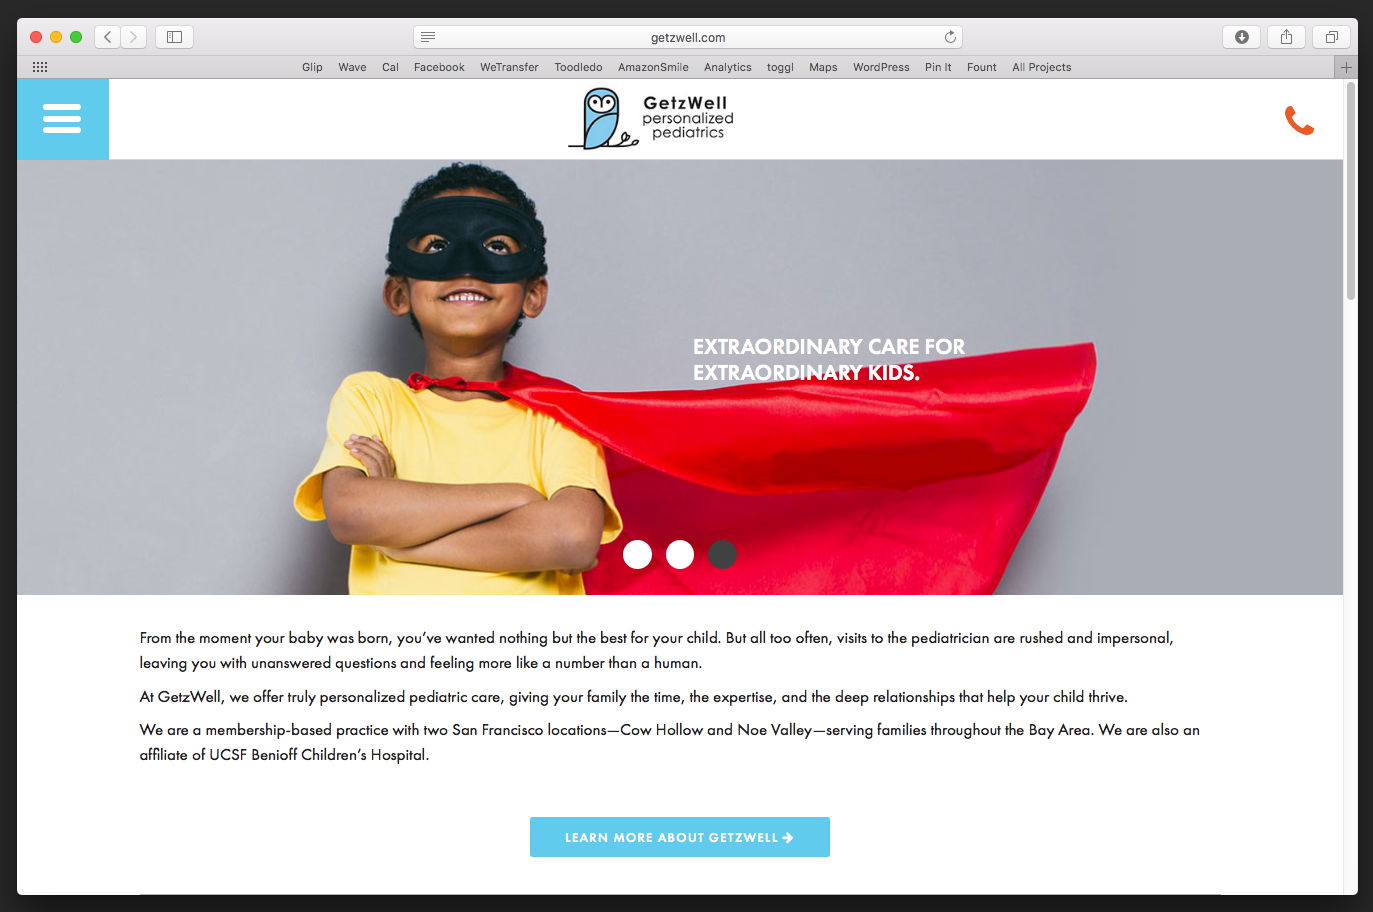 San Francisco small business branding - personalized pediatrics